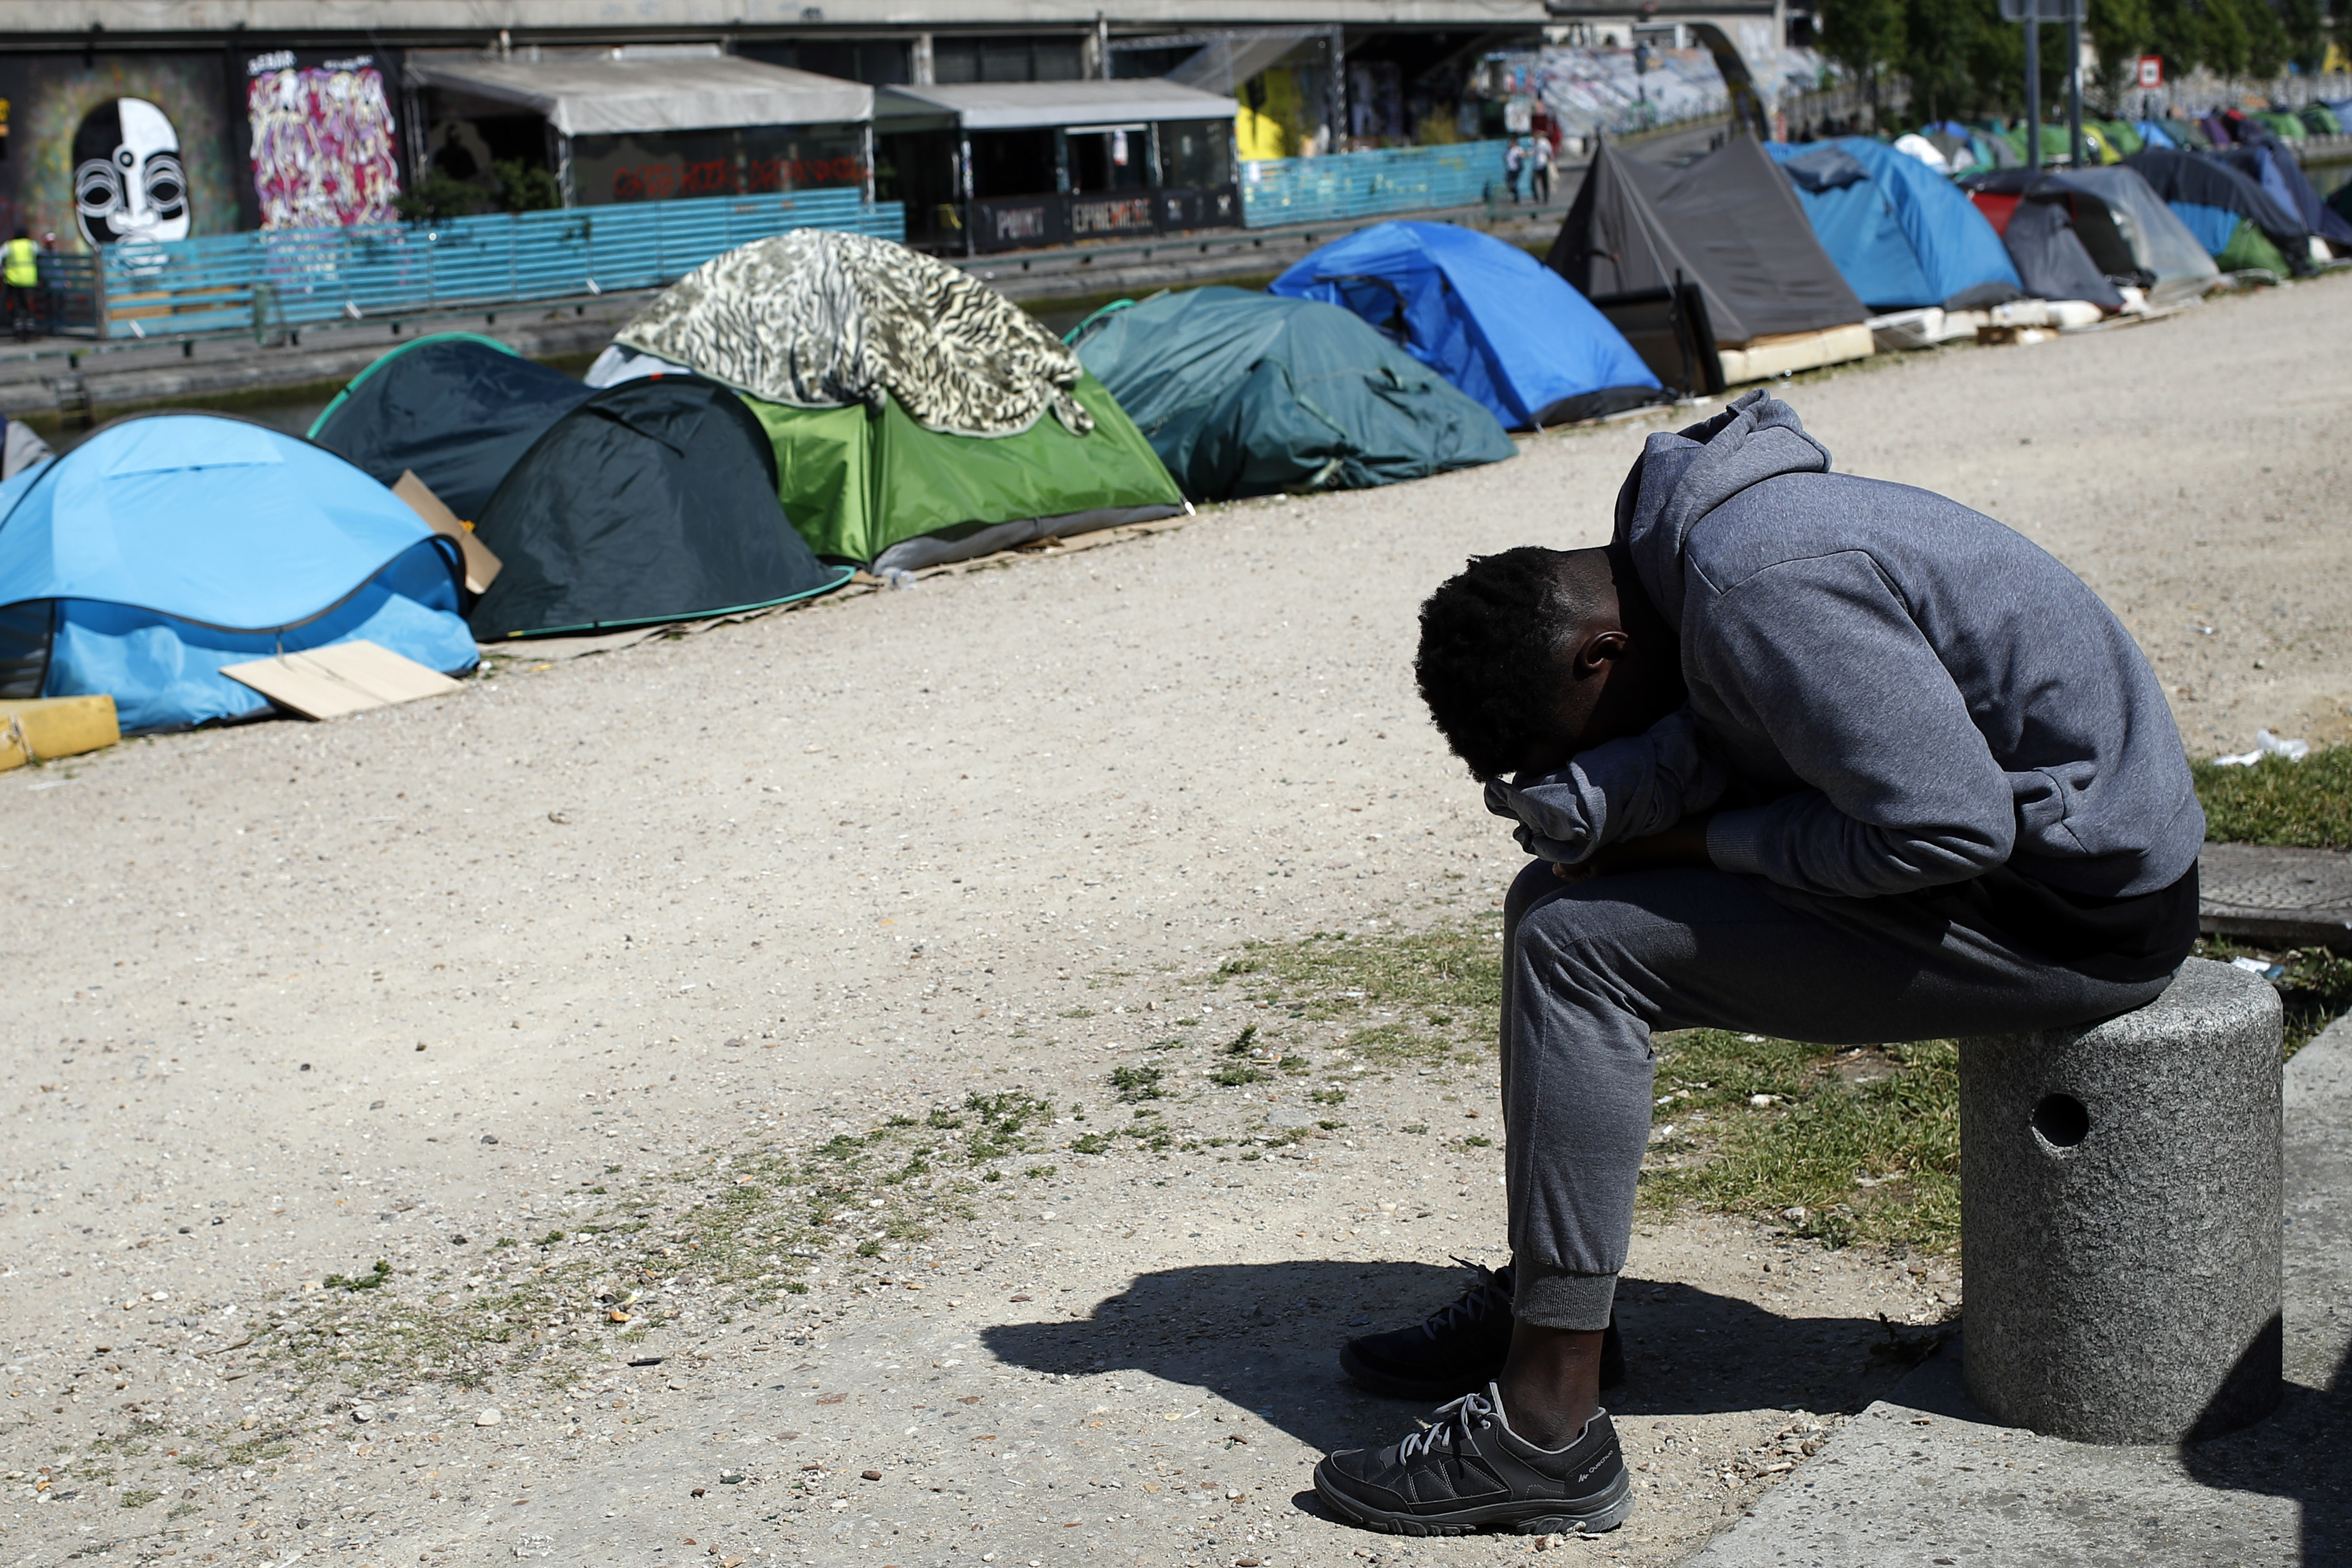 A migrant takes a nap near tents where asylum seekers live in a makeshift camp alongside the canal Saint-Martin (Francois Mori/AP)